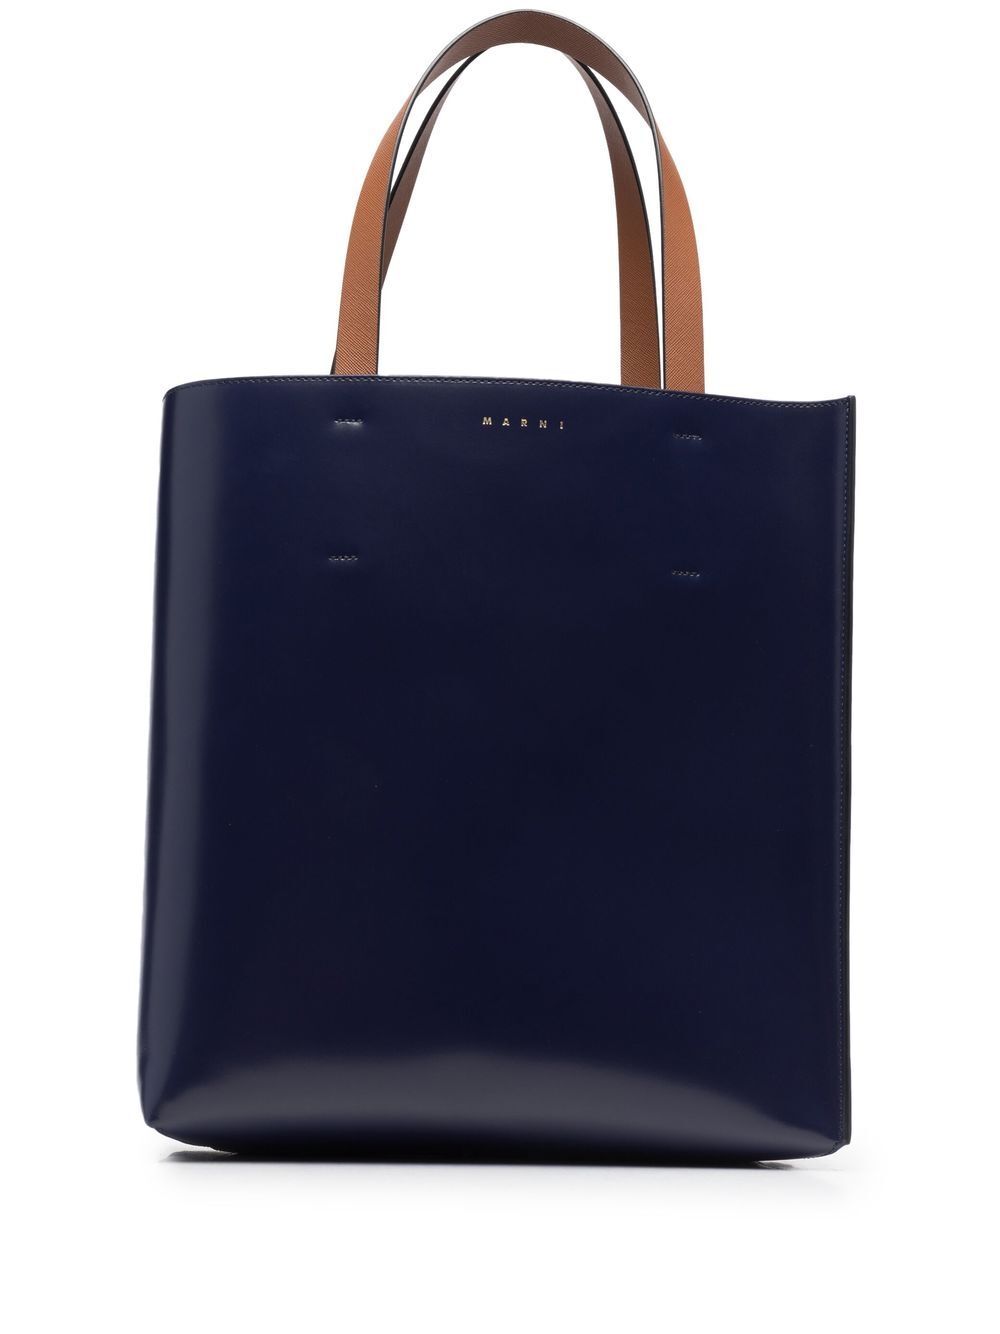 Marni two-toned tote bag - Blue